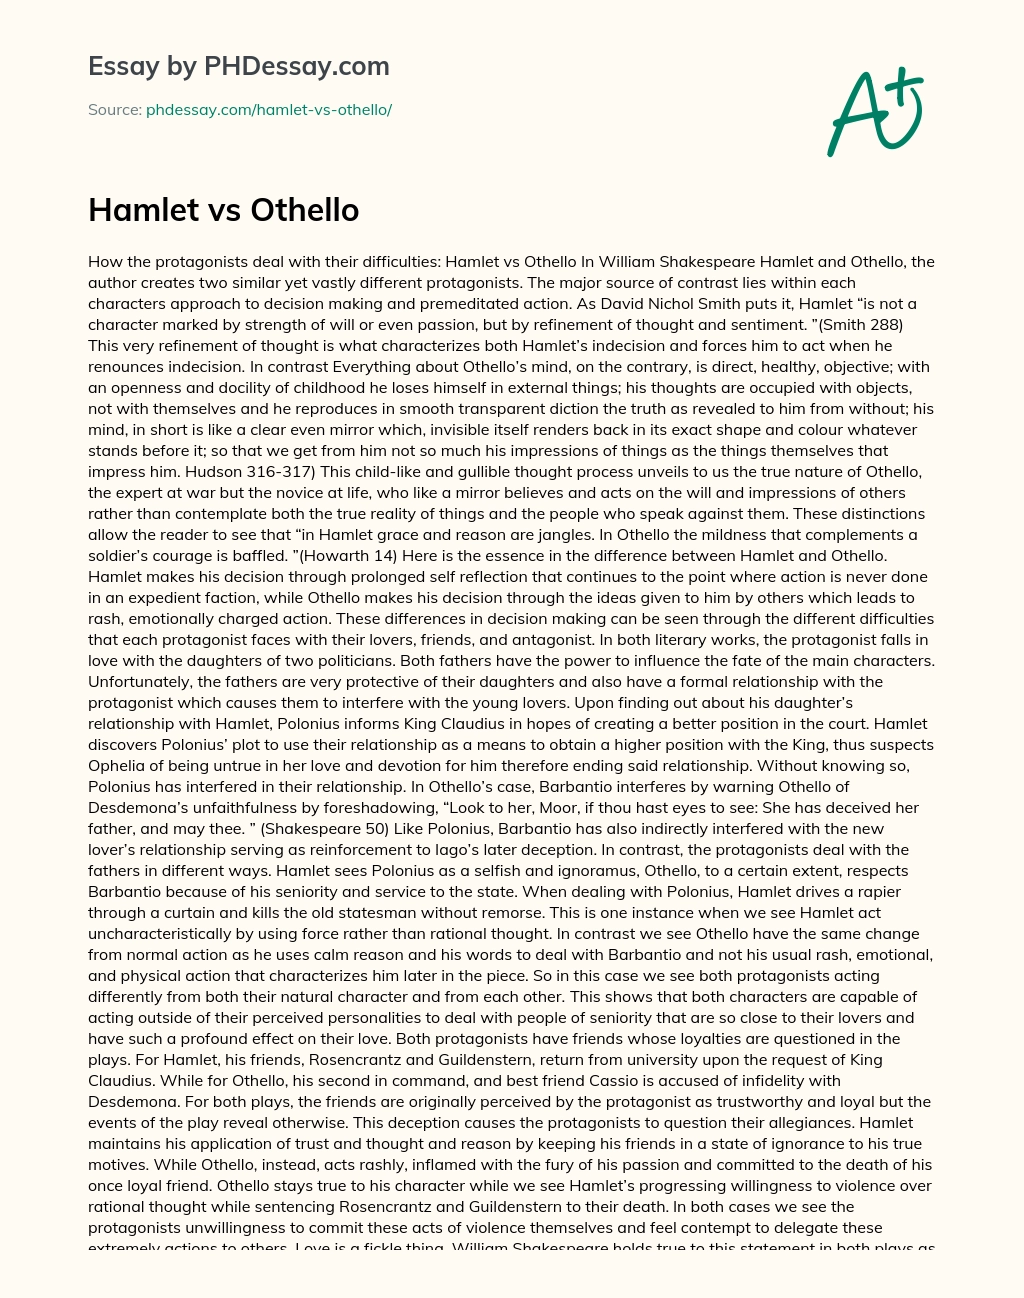 Hamlet vs Othello essay